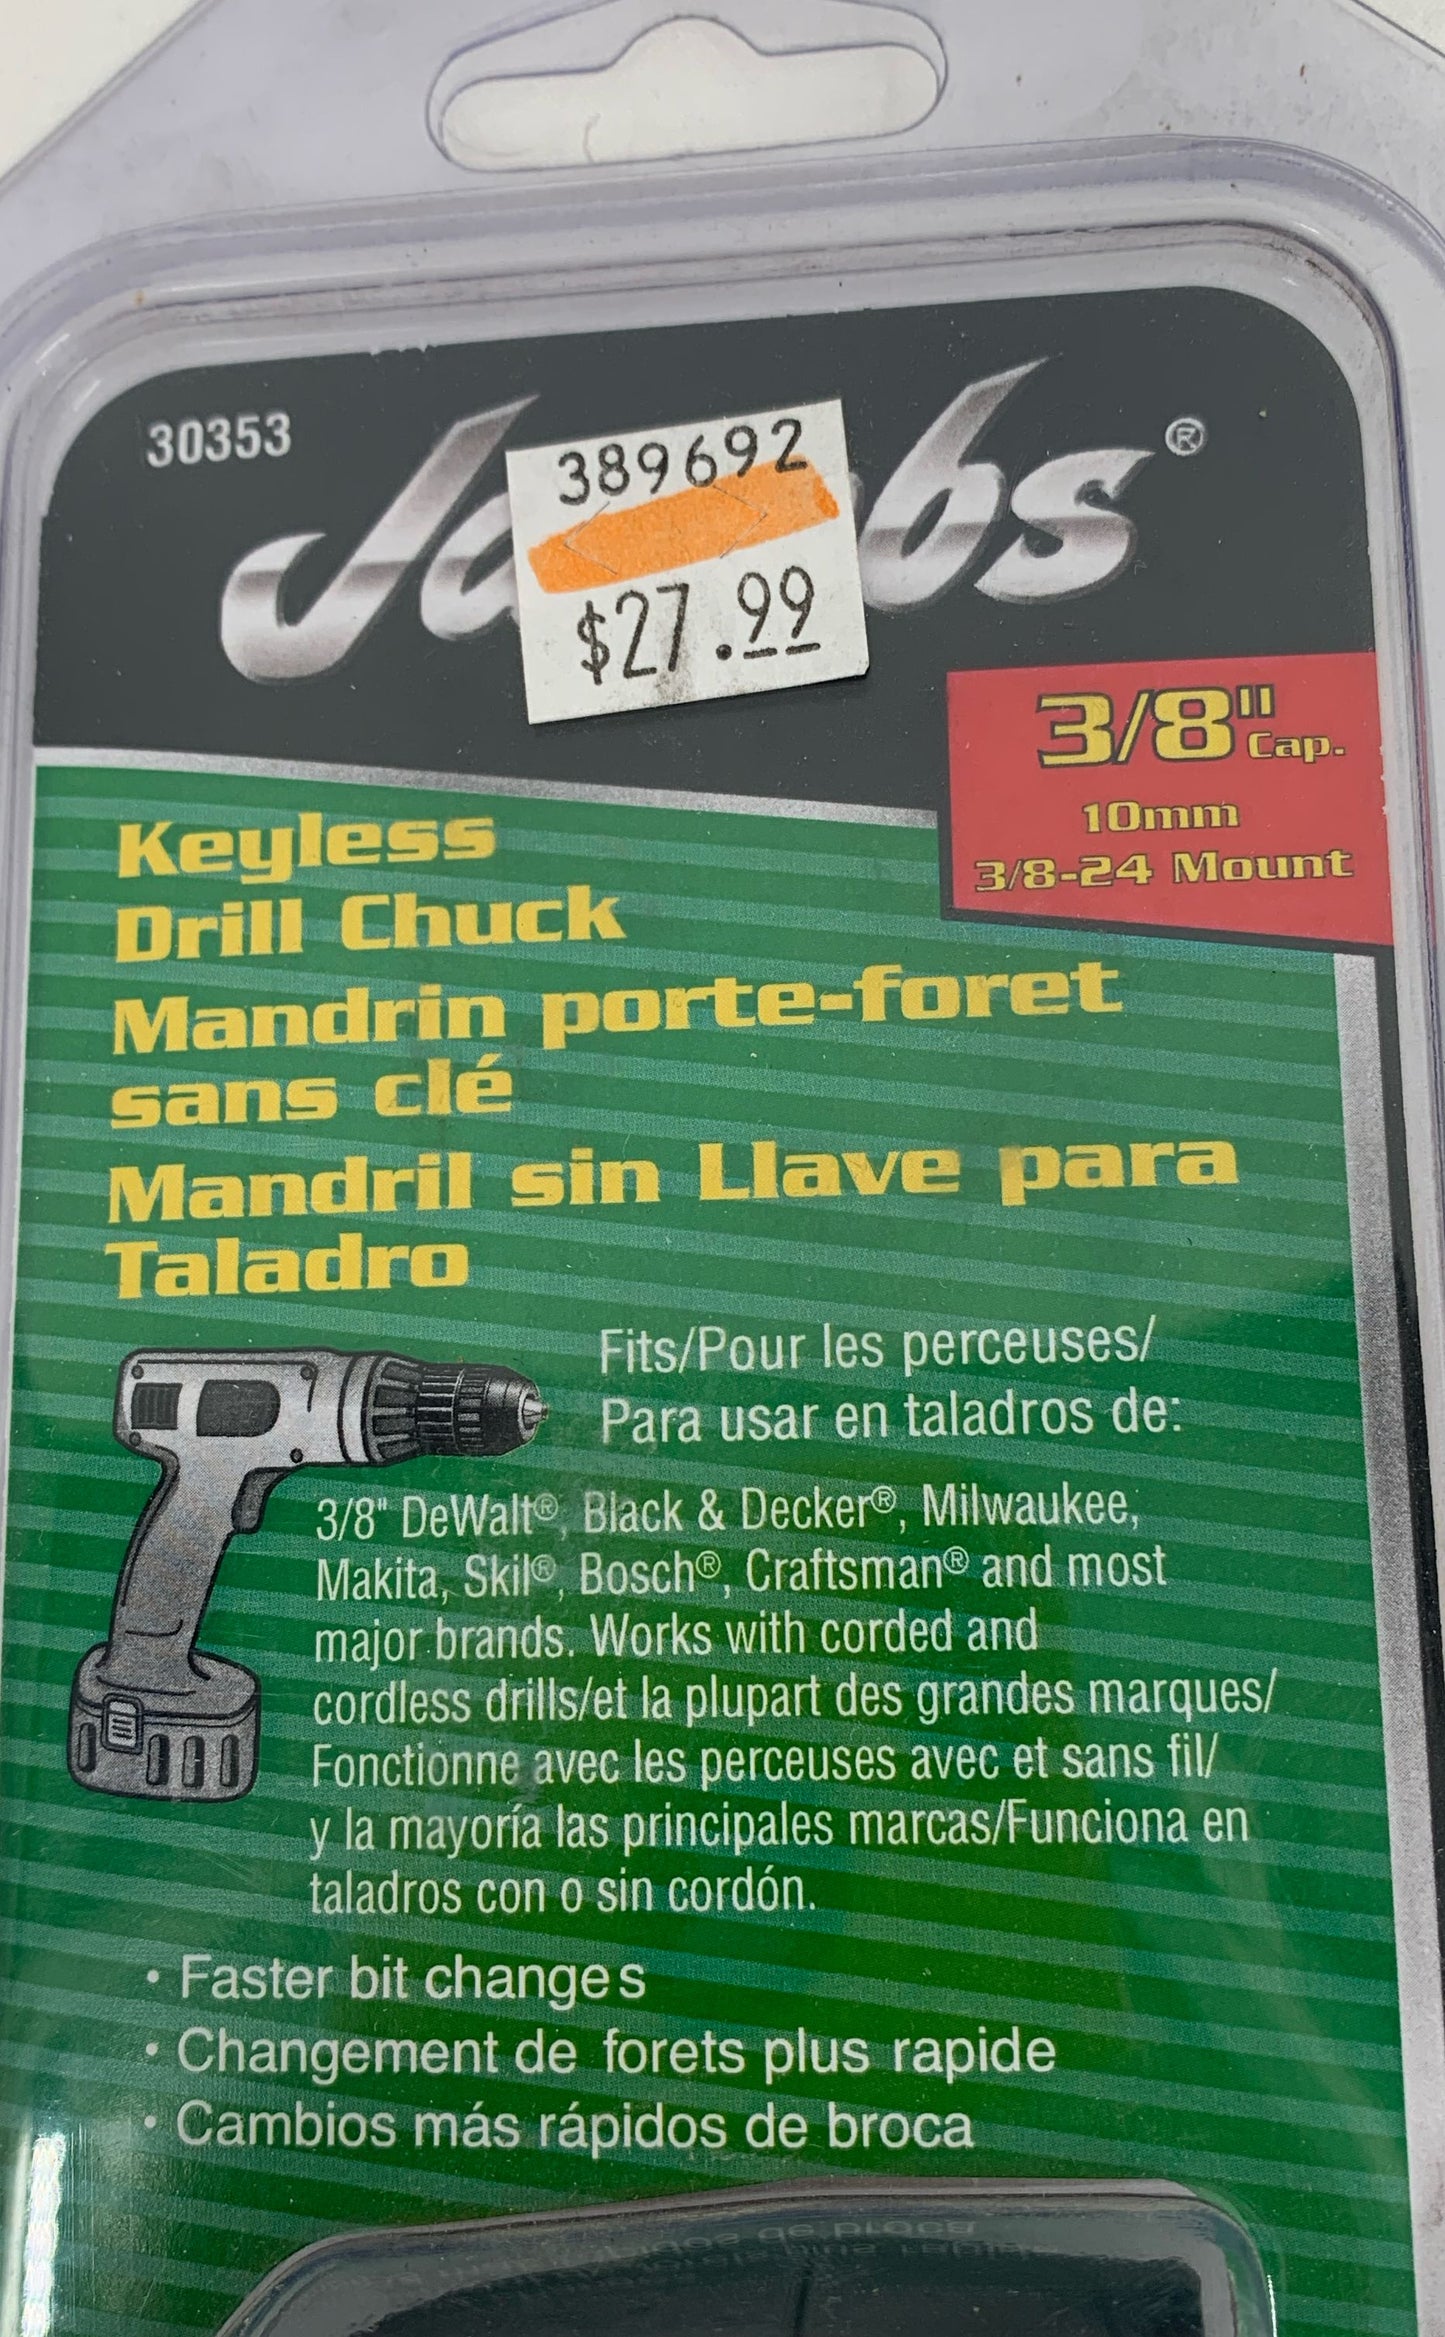 New Jacobs 30353 3/8" Keyless Drill Chuck 3/8 24 Mount 10 mm Lot Of 2